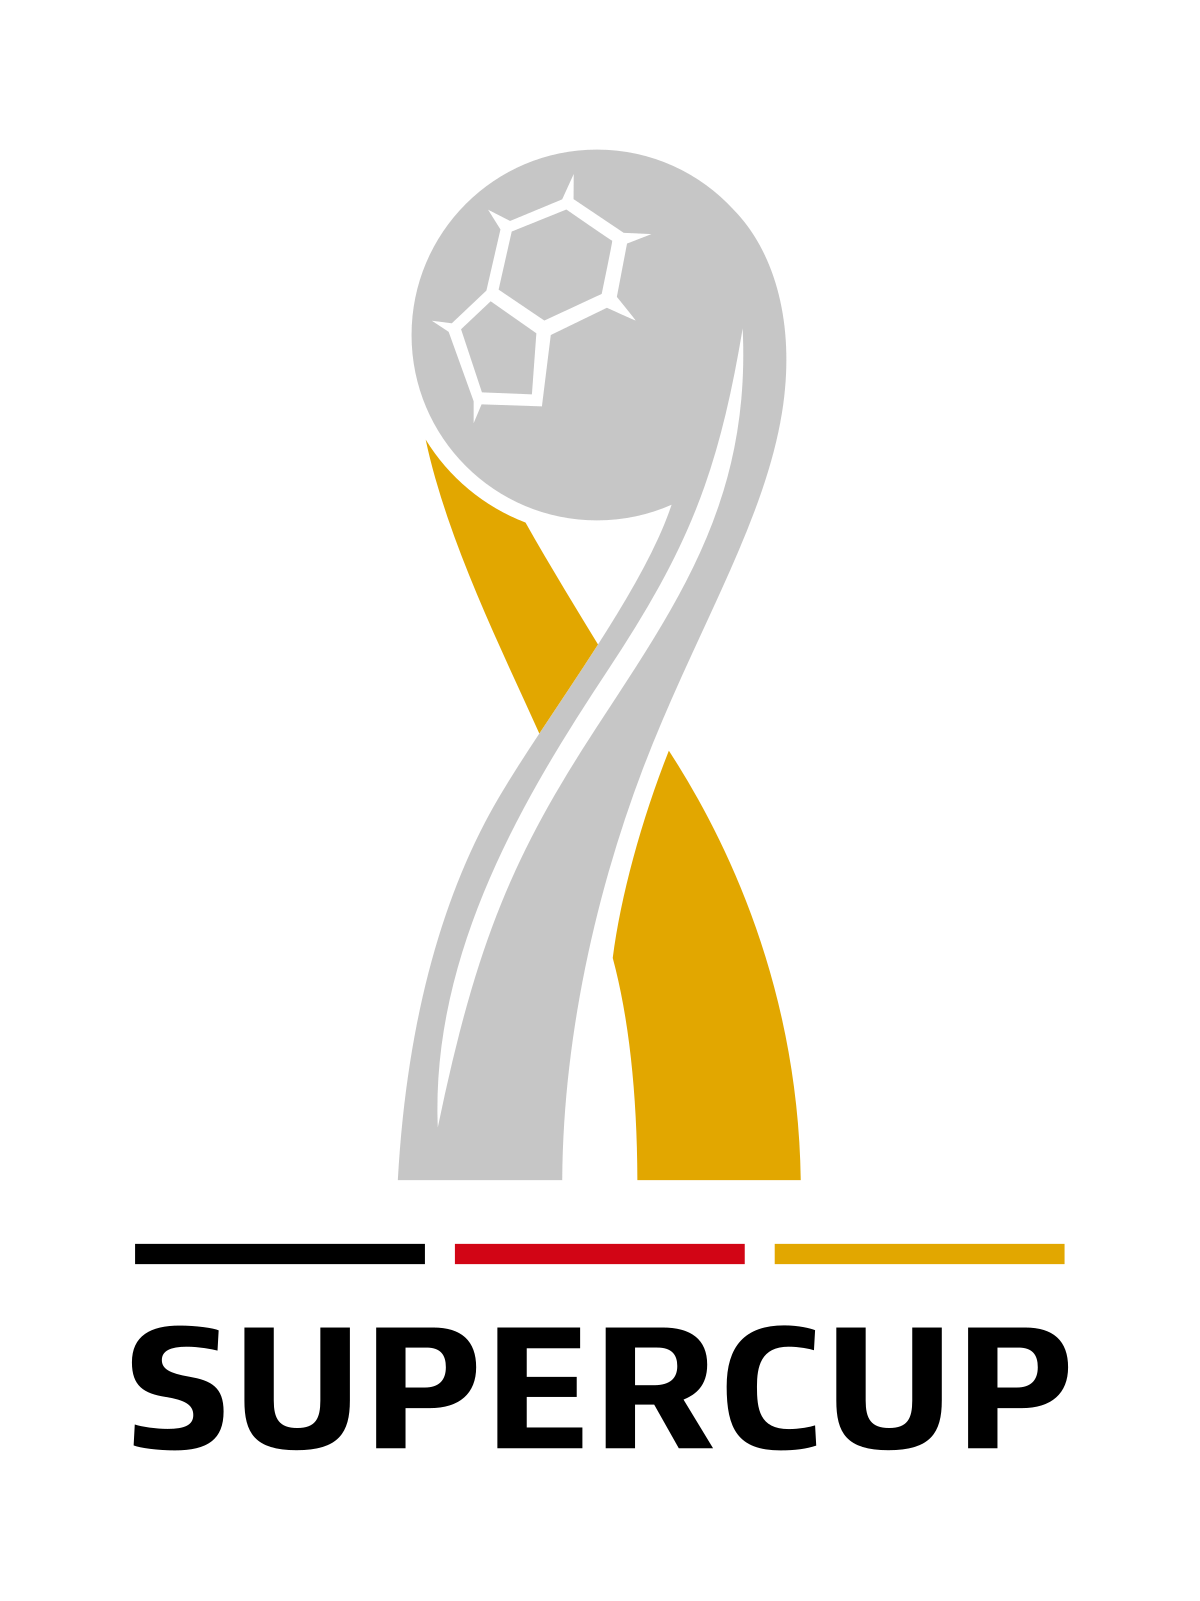 DFB-Pokal - Wikipedia